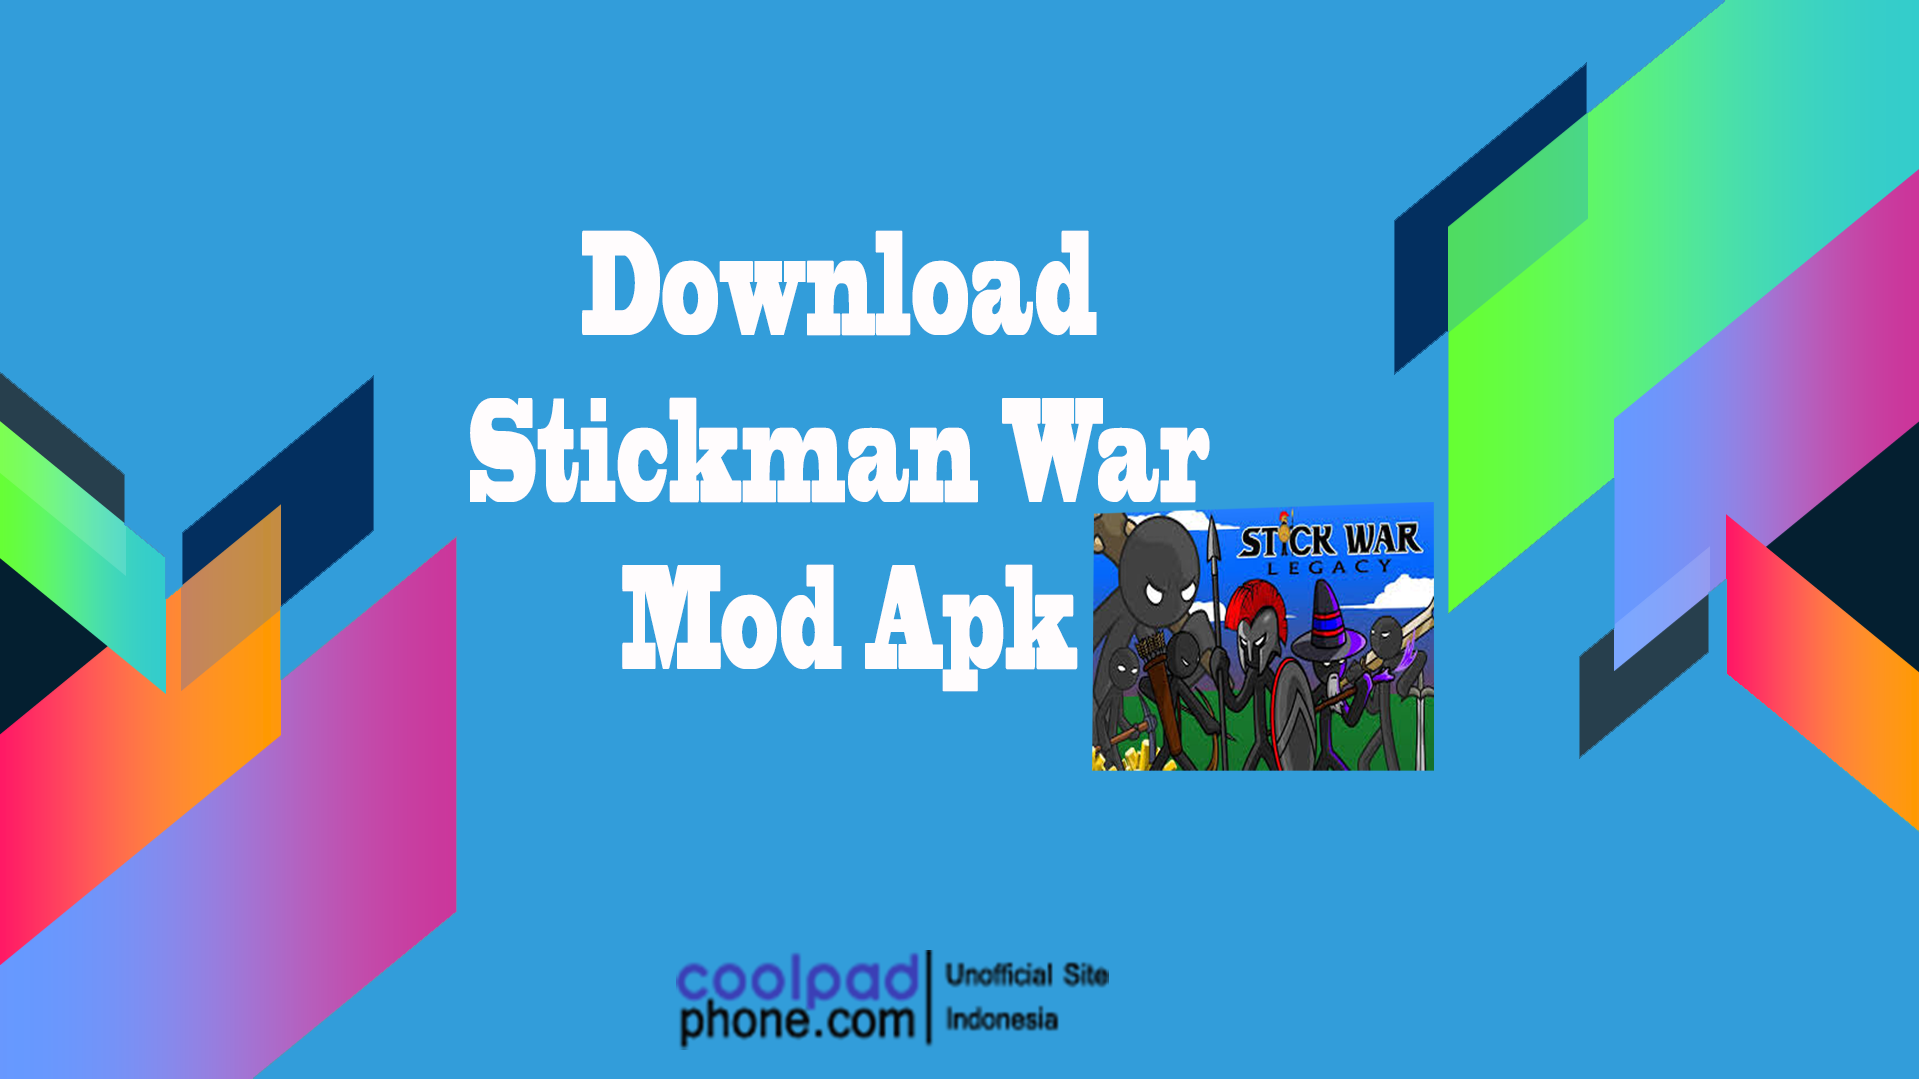 Download-Stickman-War-Mod-Apk